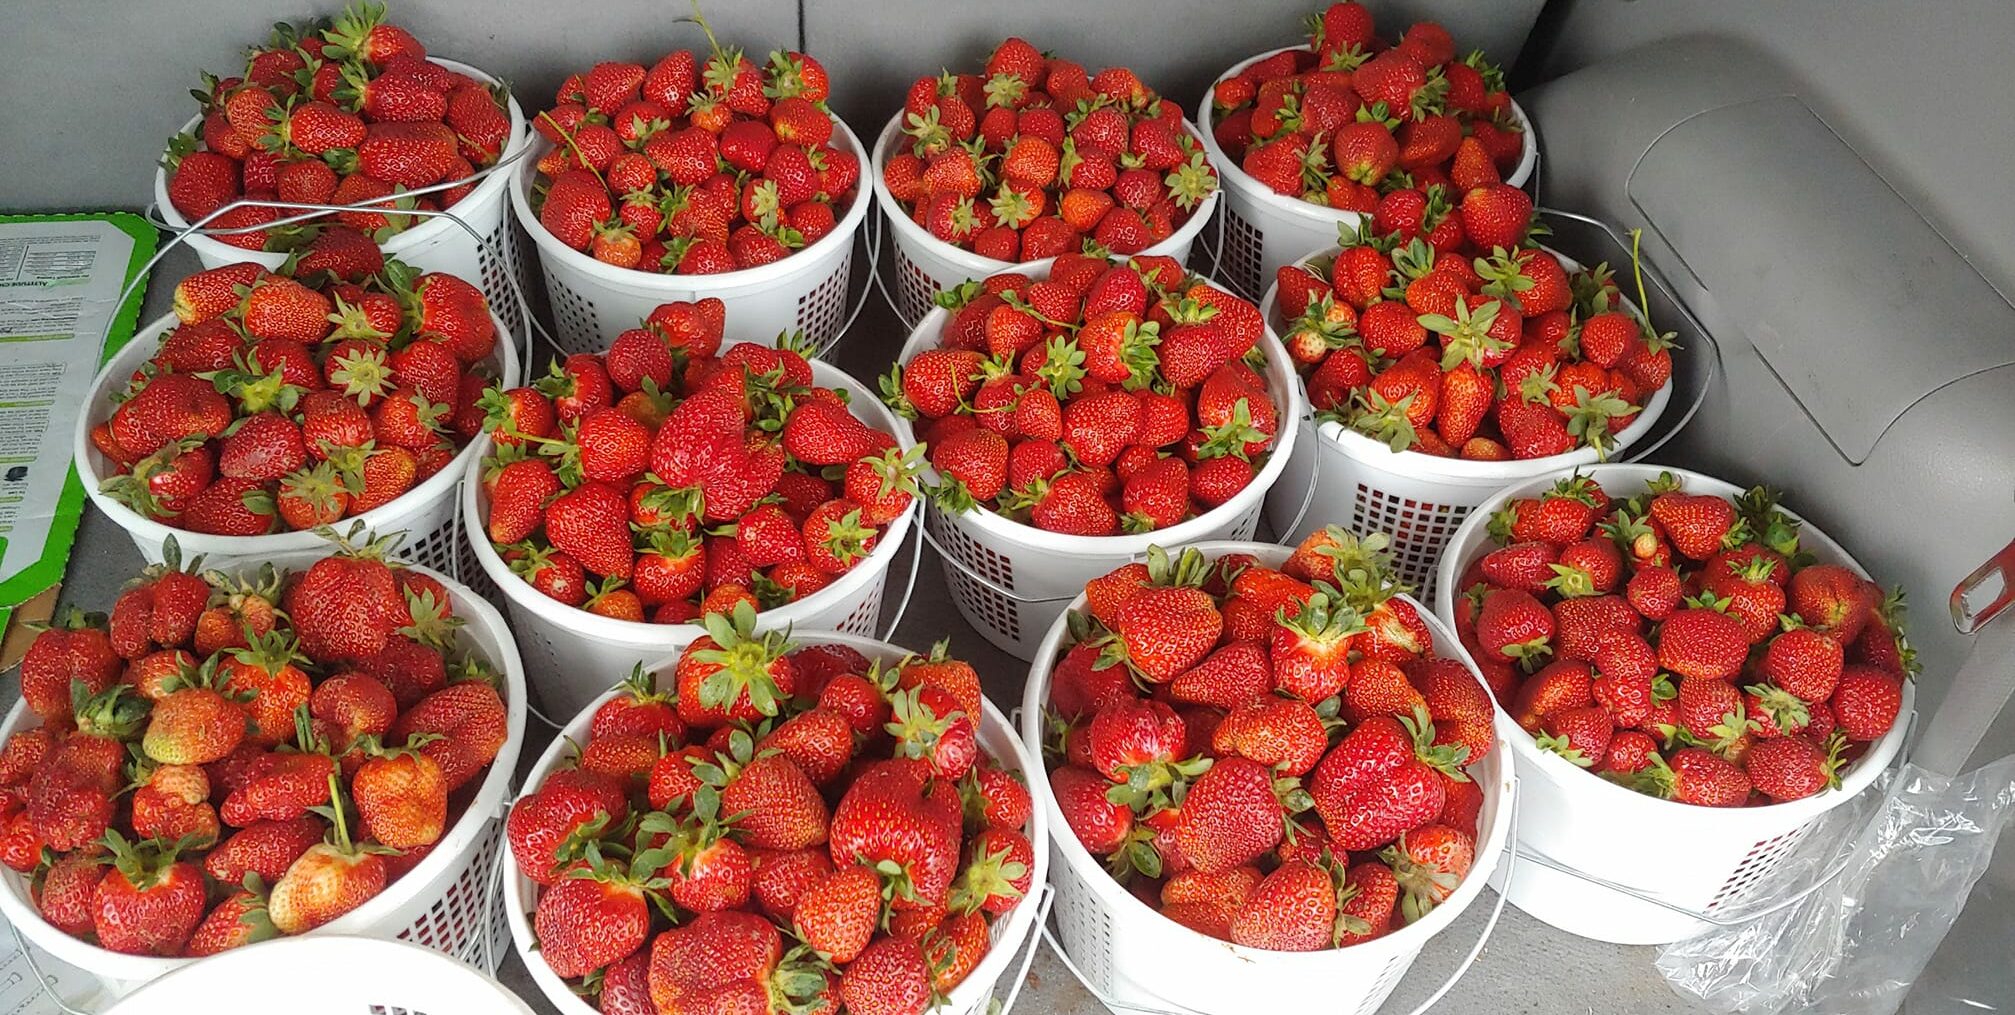 buckets of strawberries